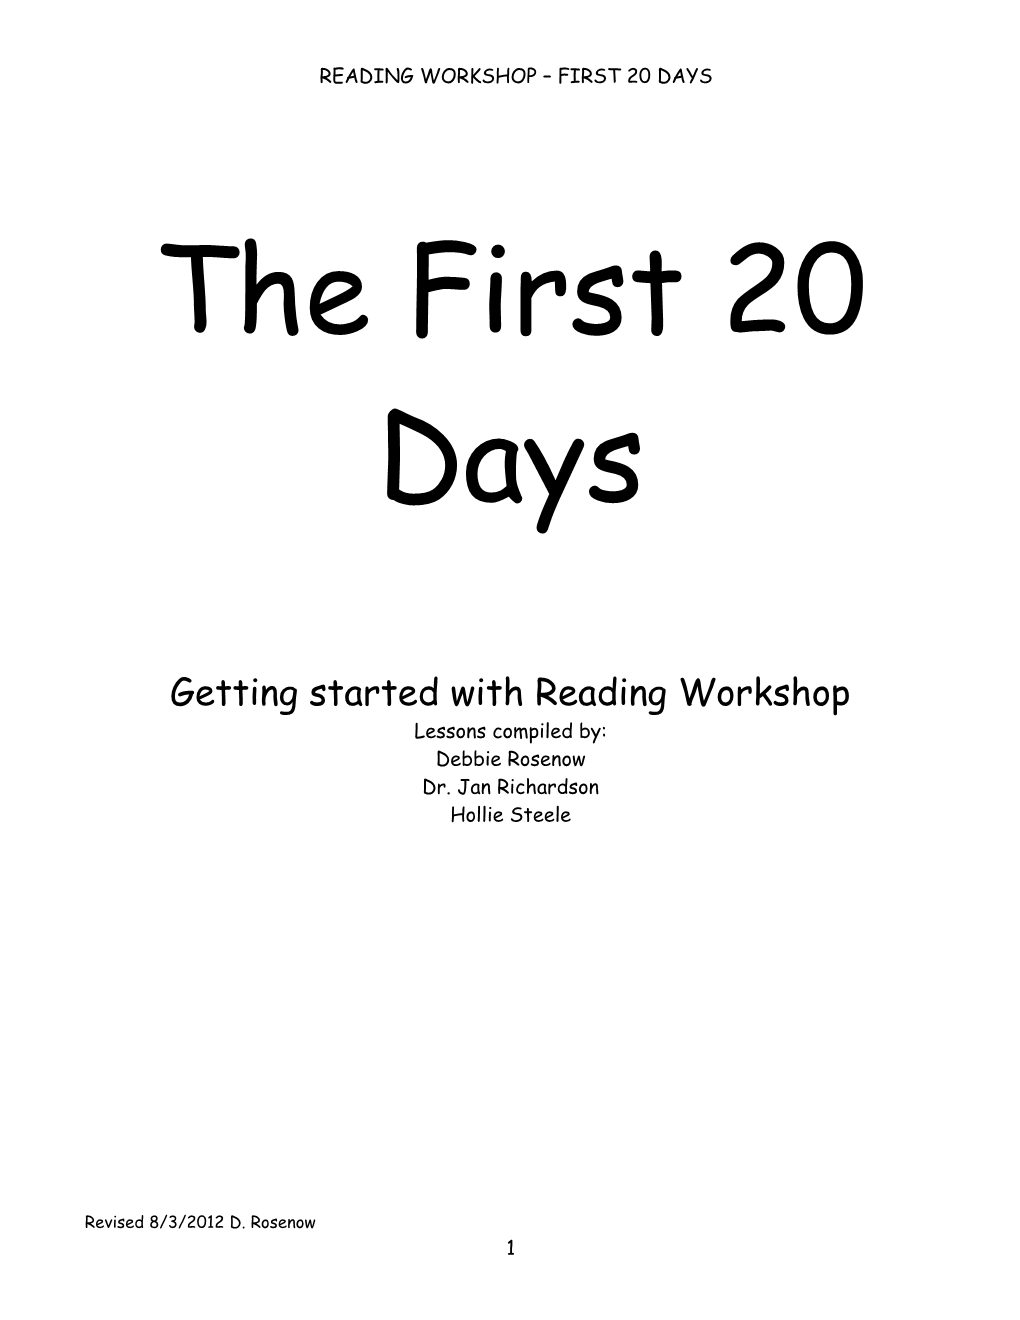 Reading Workshop First 20 Days